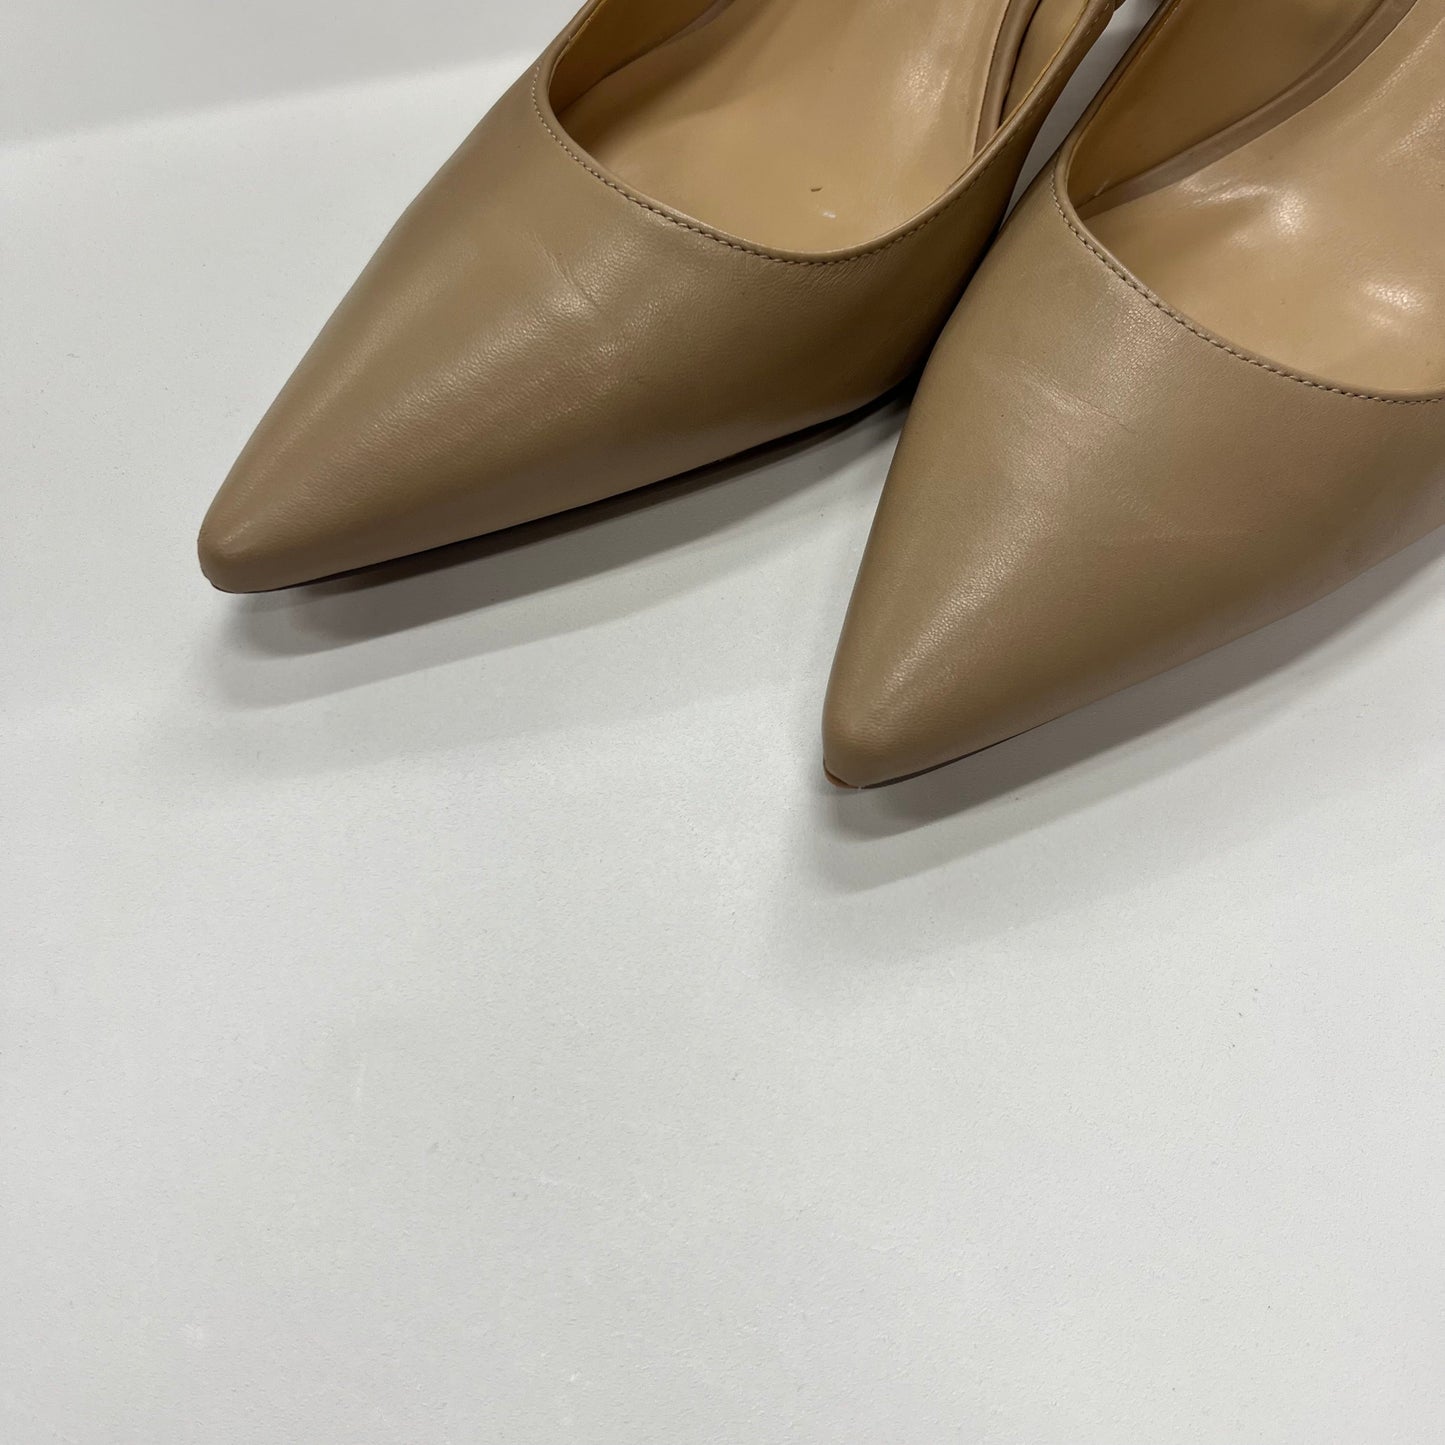 Beige Shoes Heels D Orsay Ann Taylor, Size 9.5